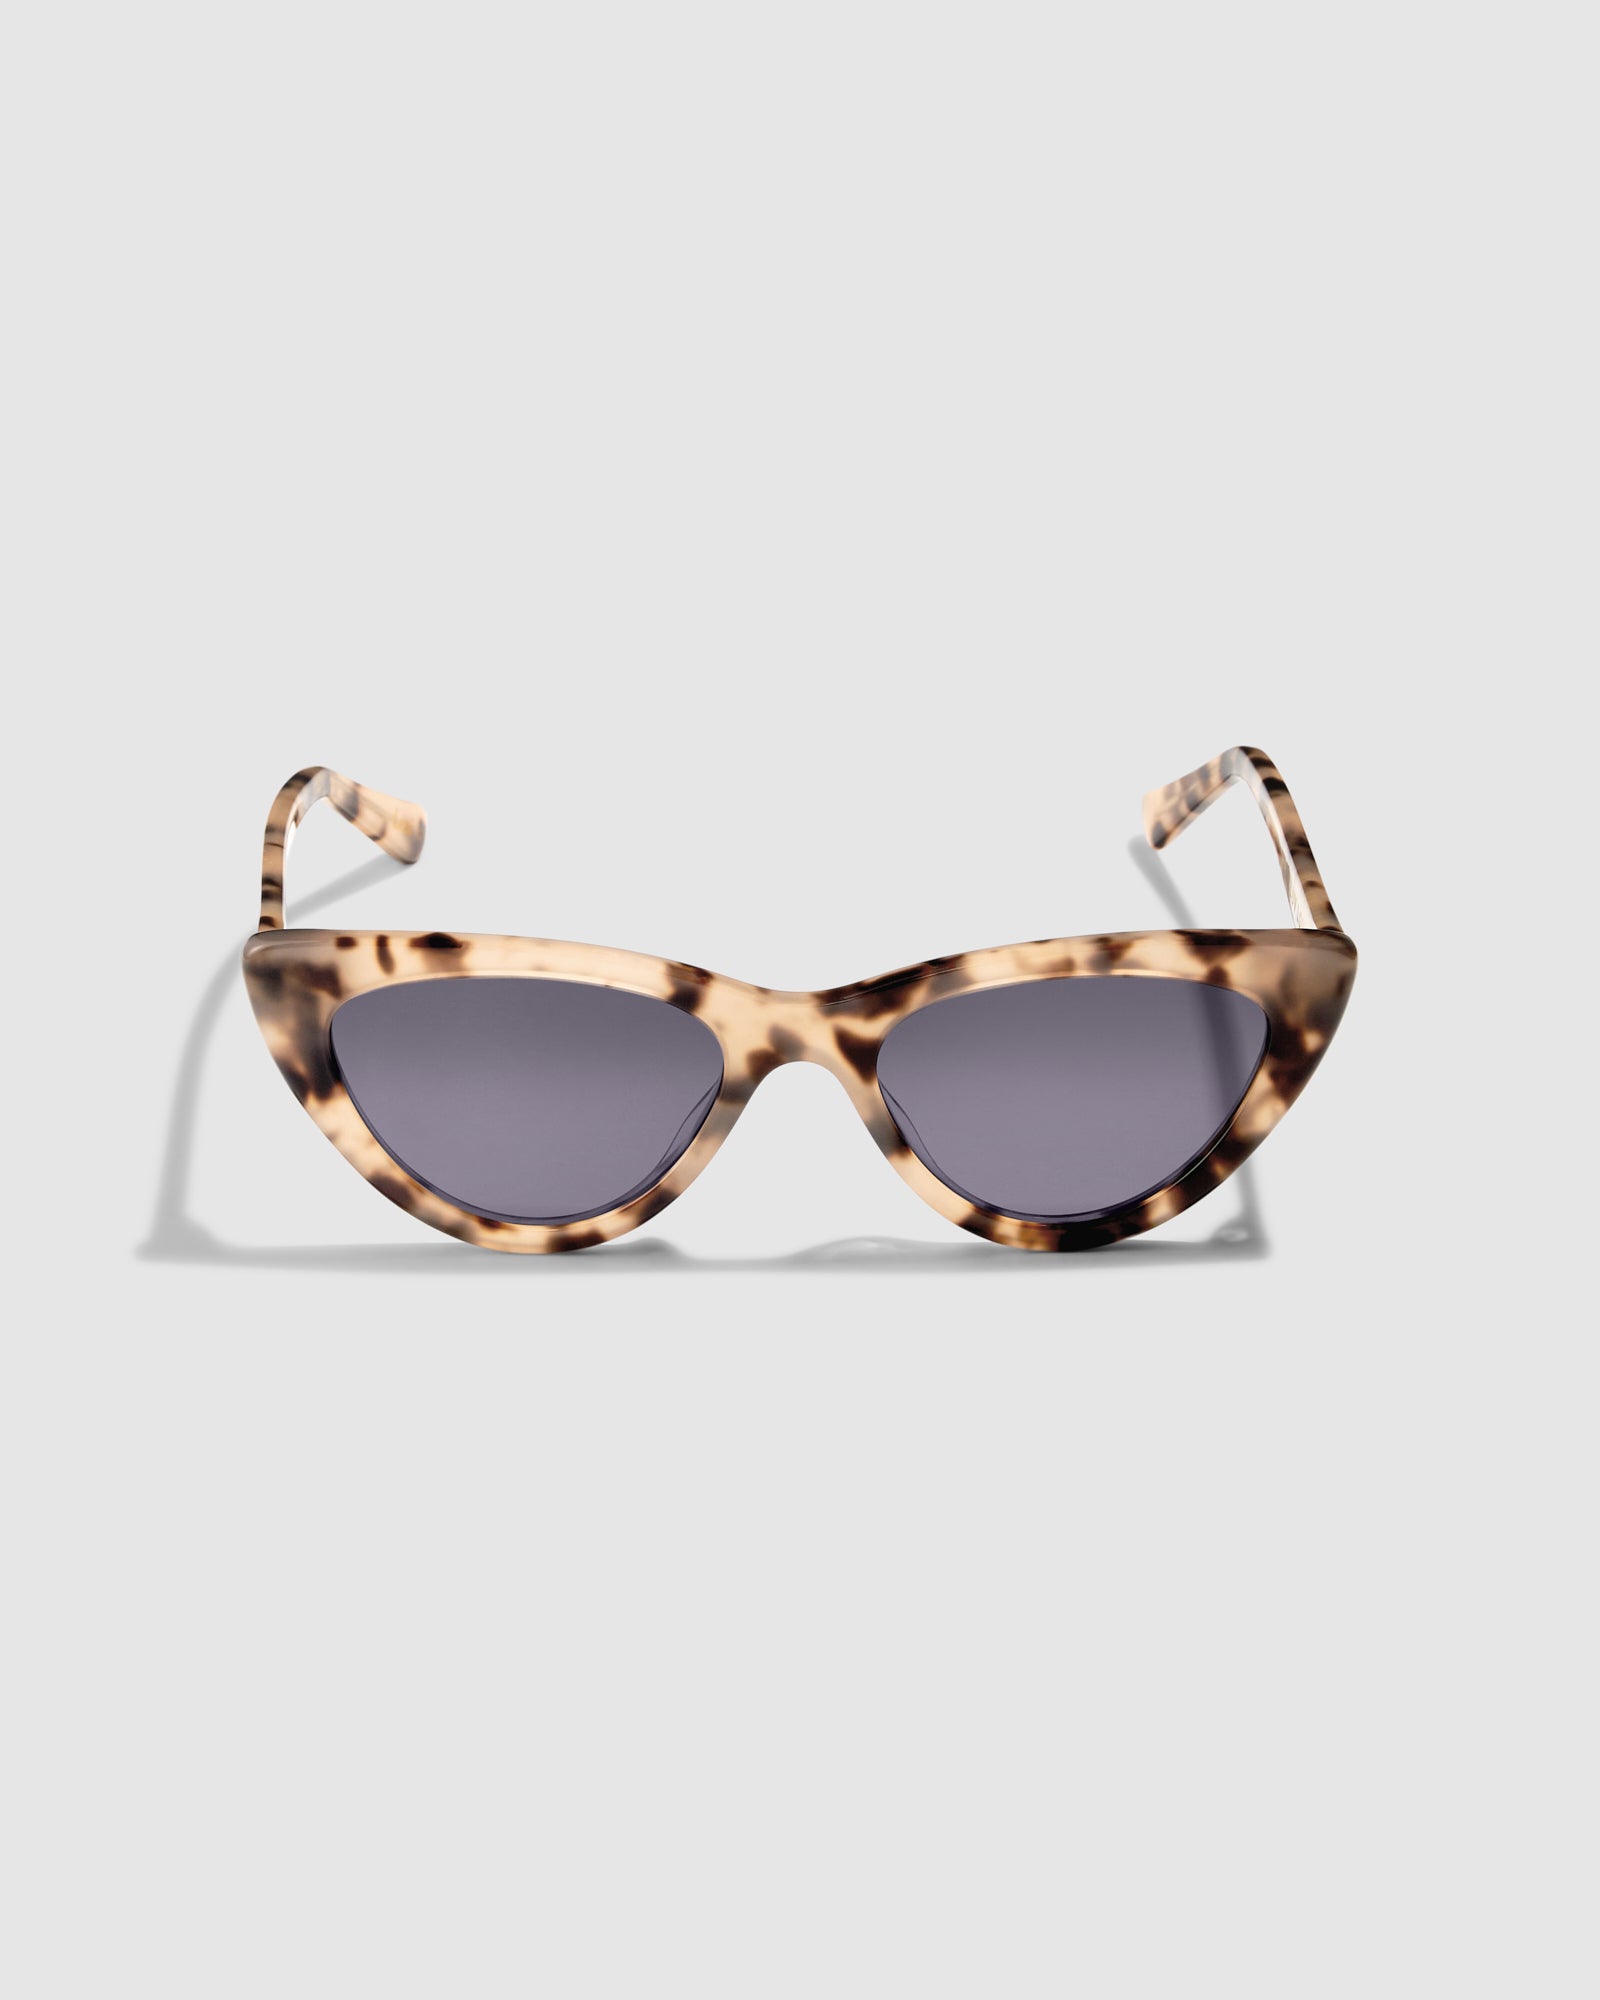 The Leui, Cream Tort - Classic Cat Eye Sunnies, Women's Sunglasses & Eyewear by Luv Lou